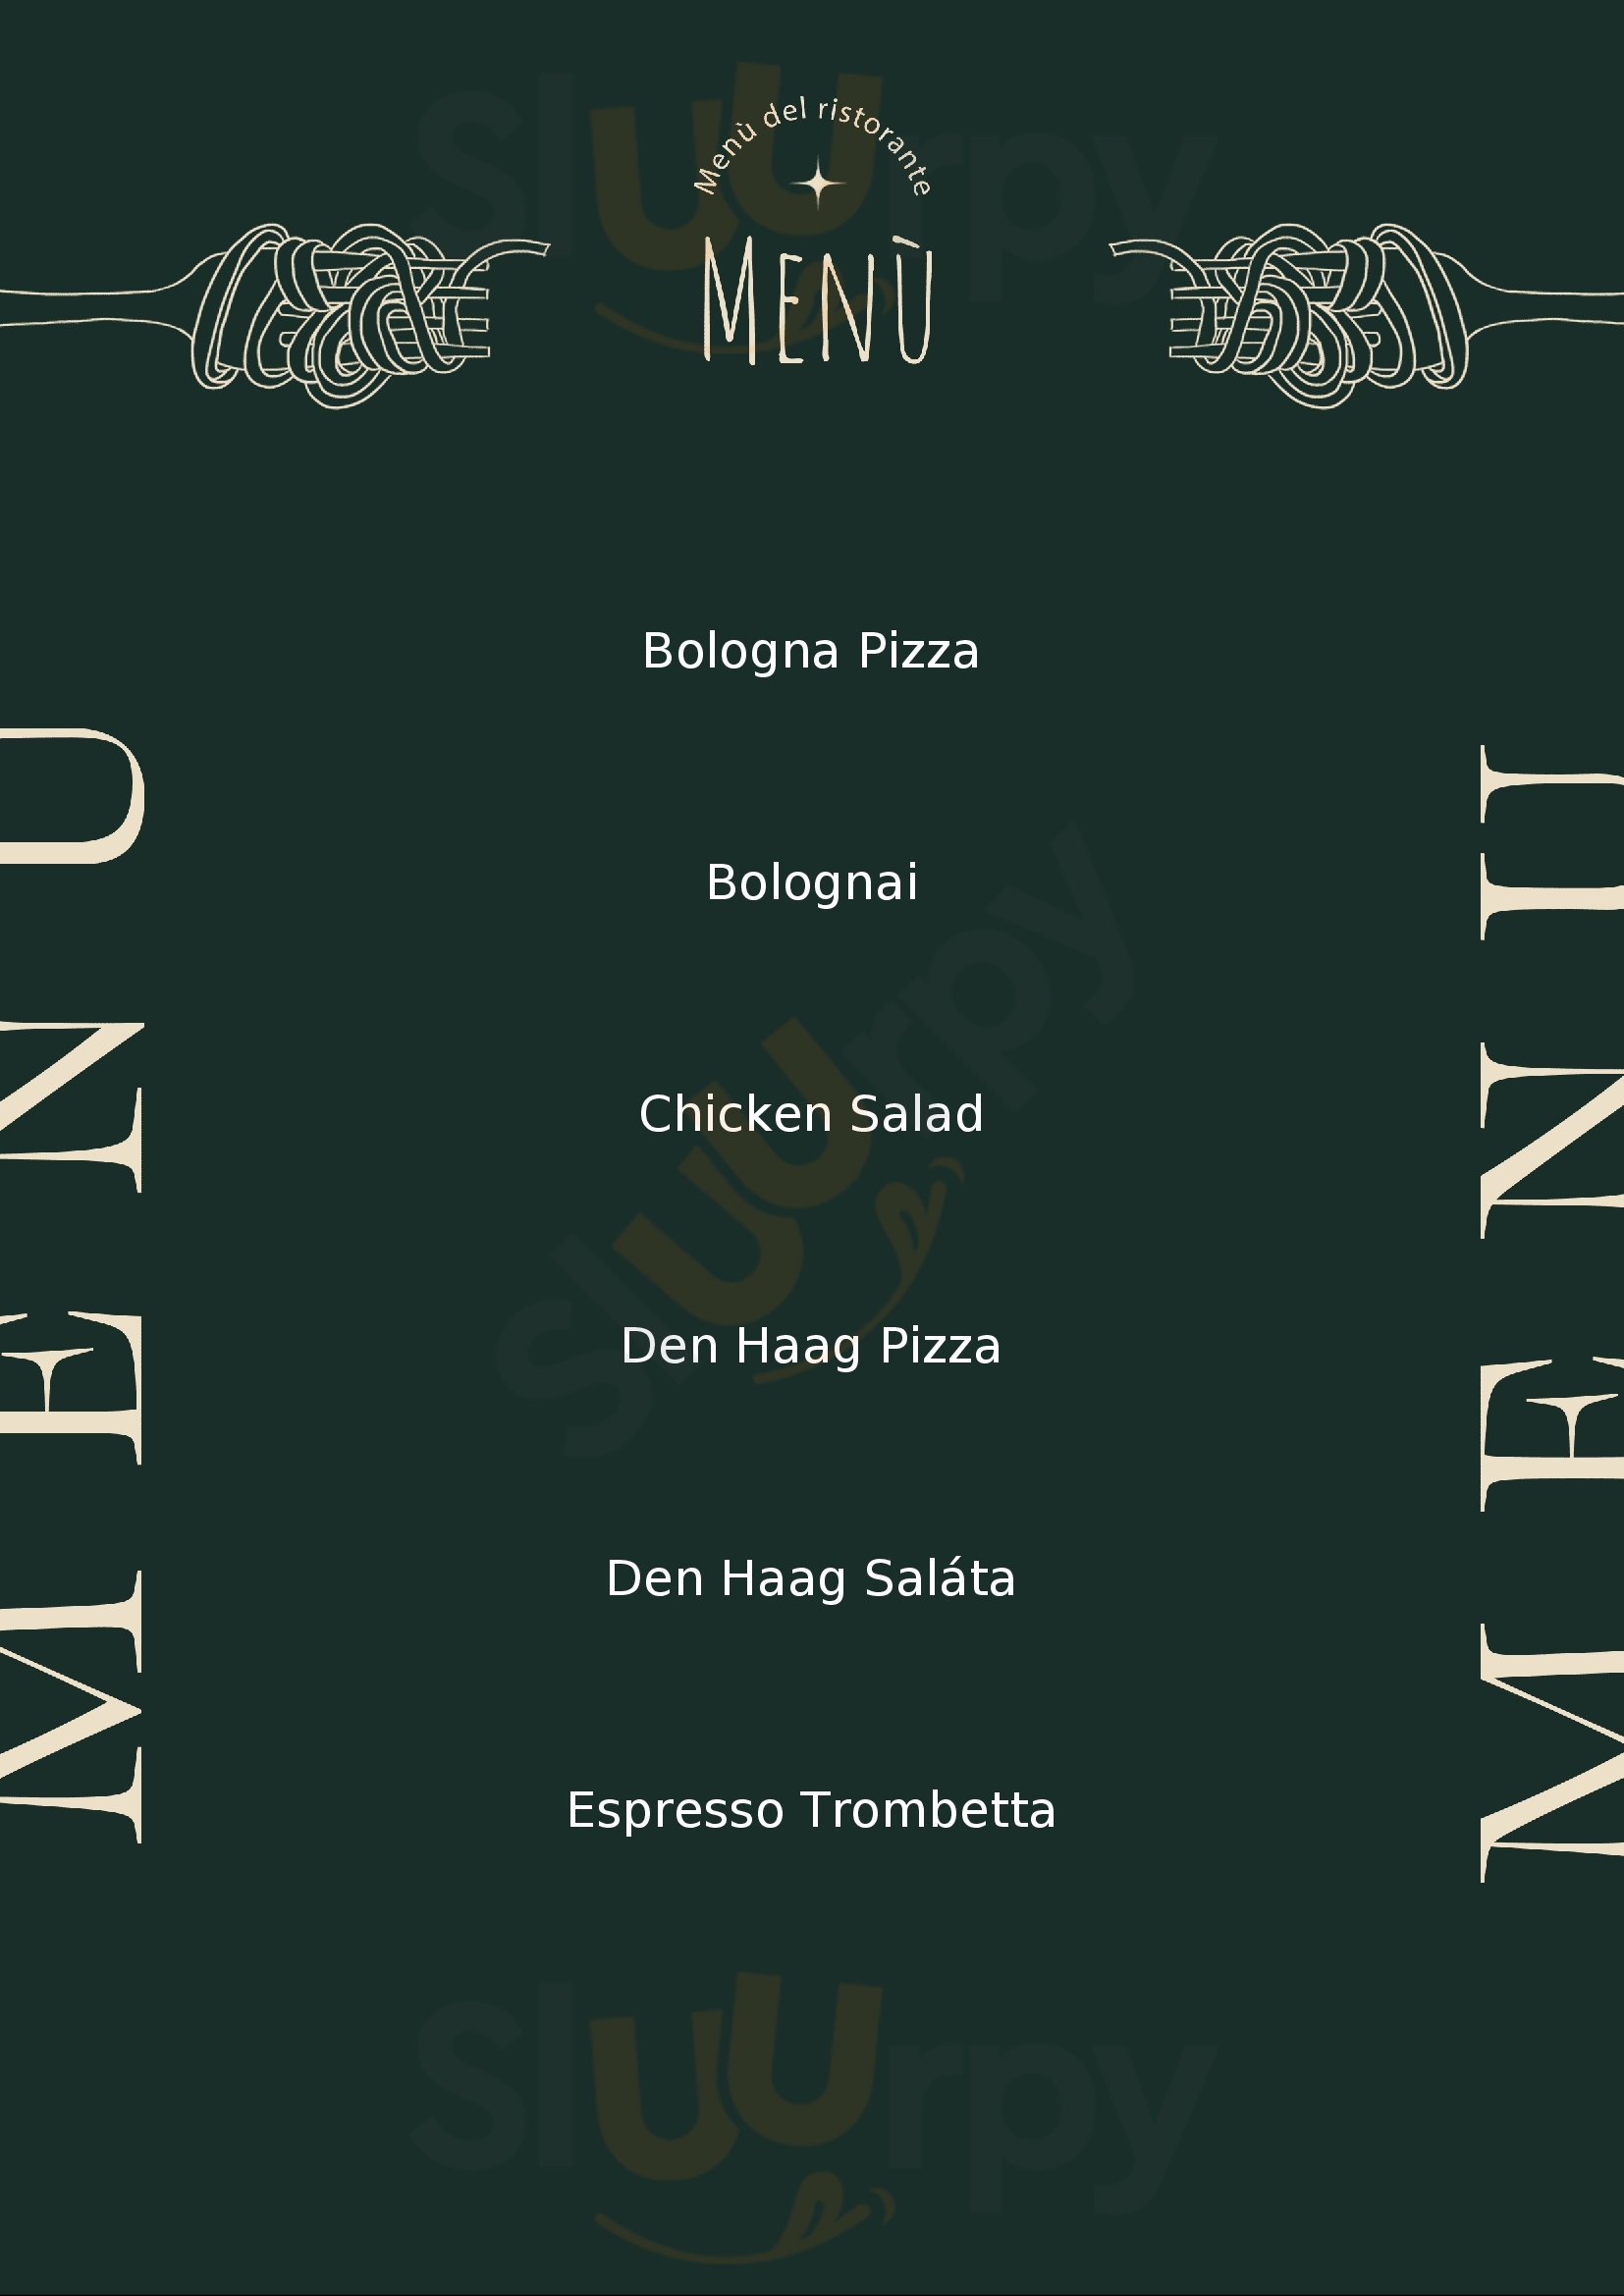 Den Haag Pizzeria Budapest Menu - 1